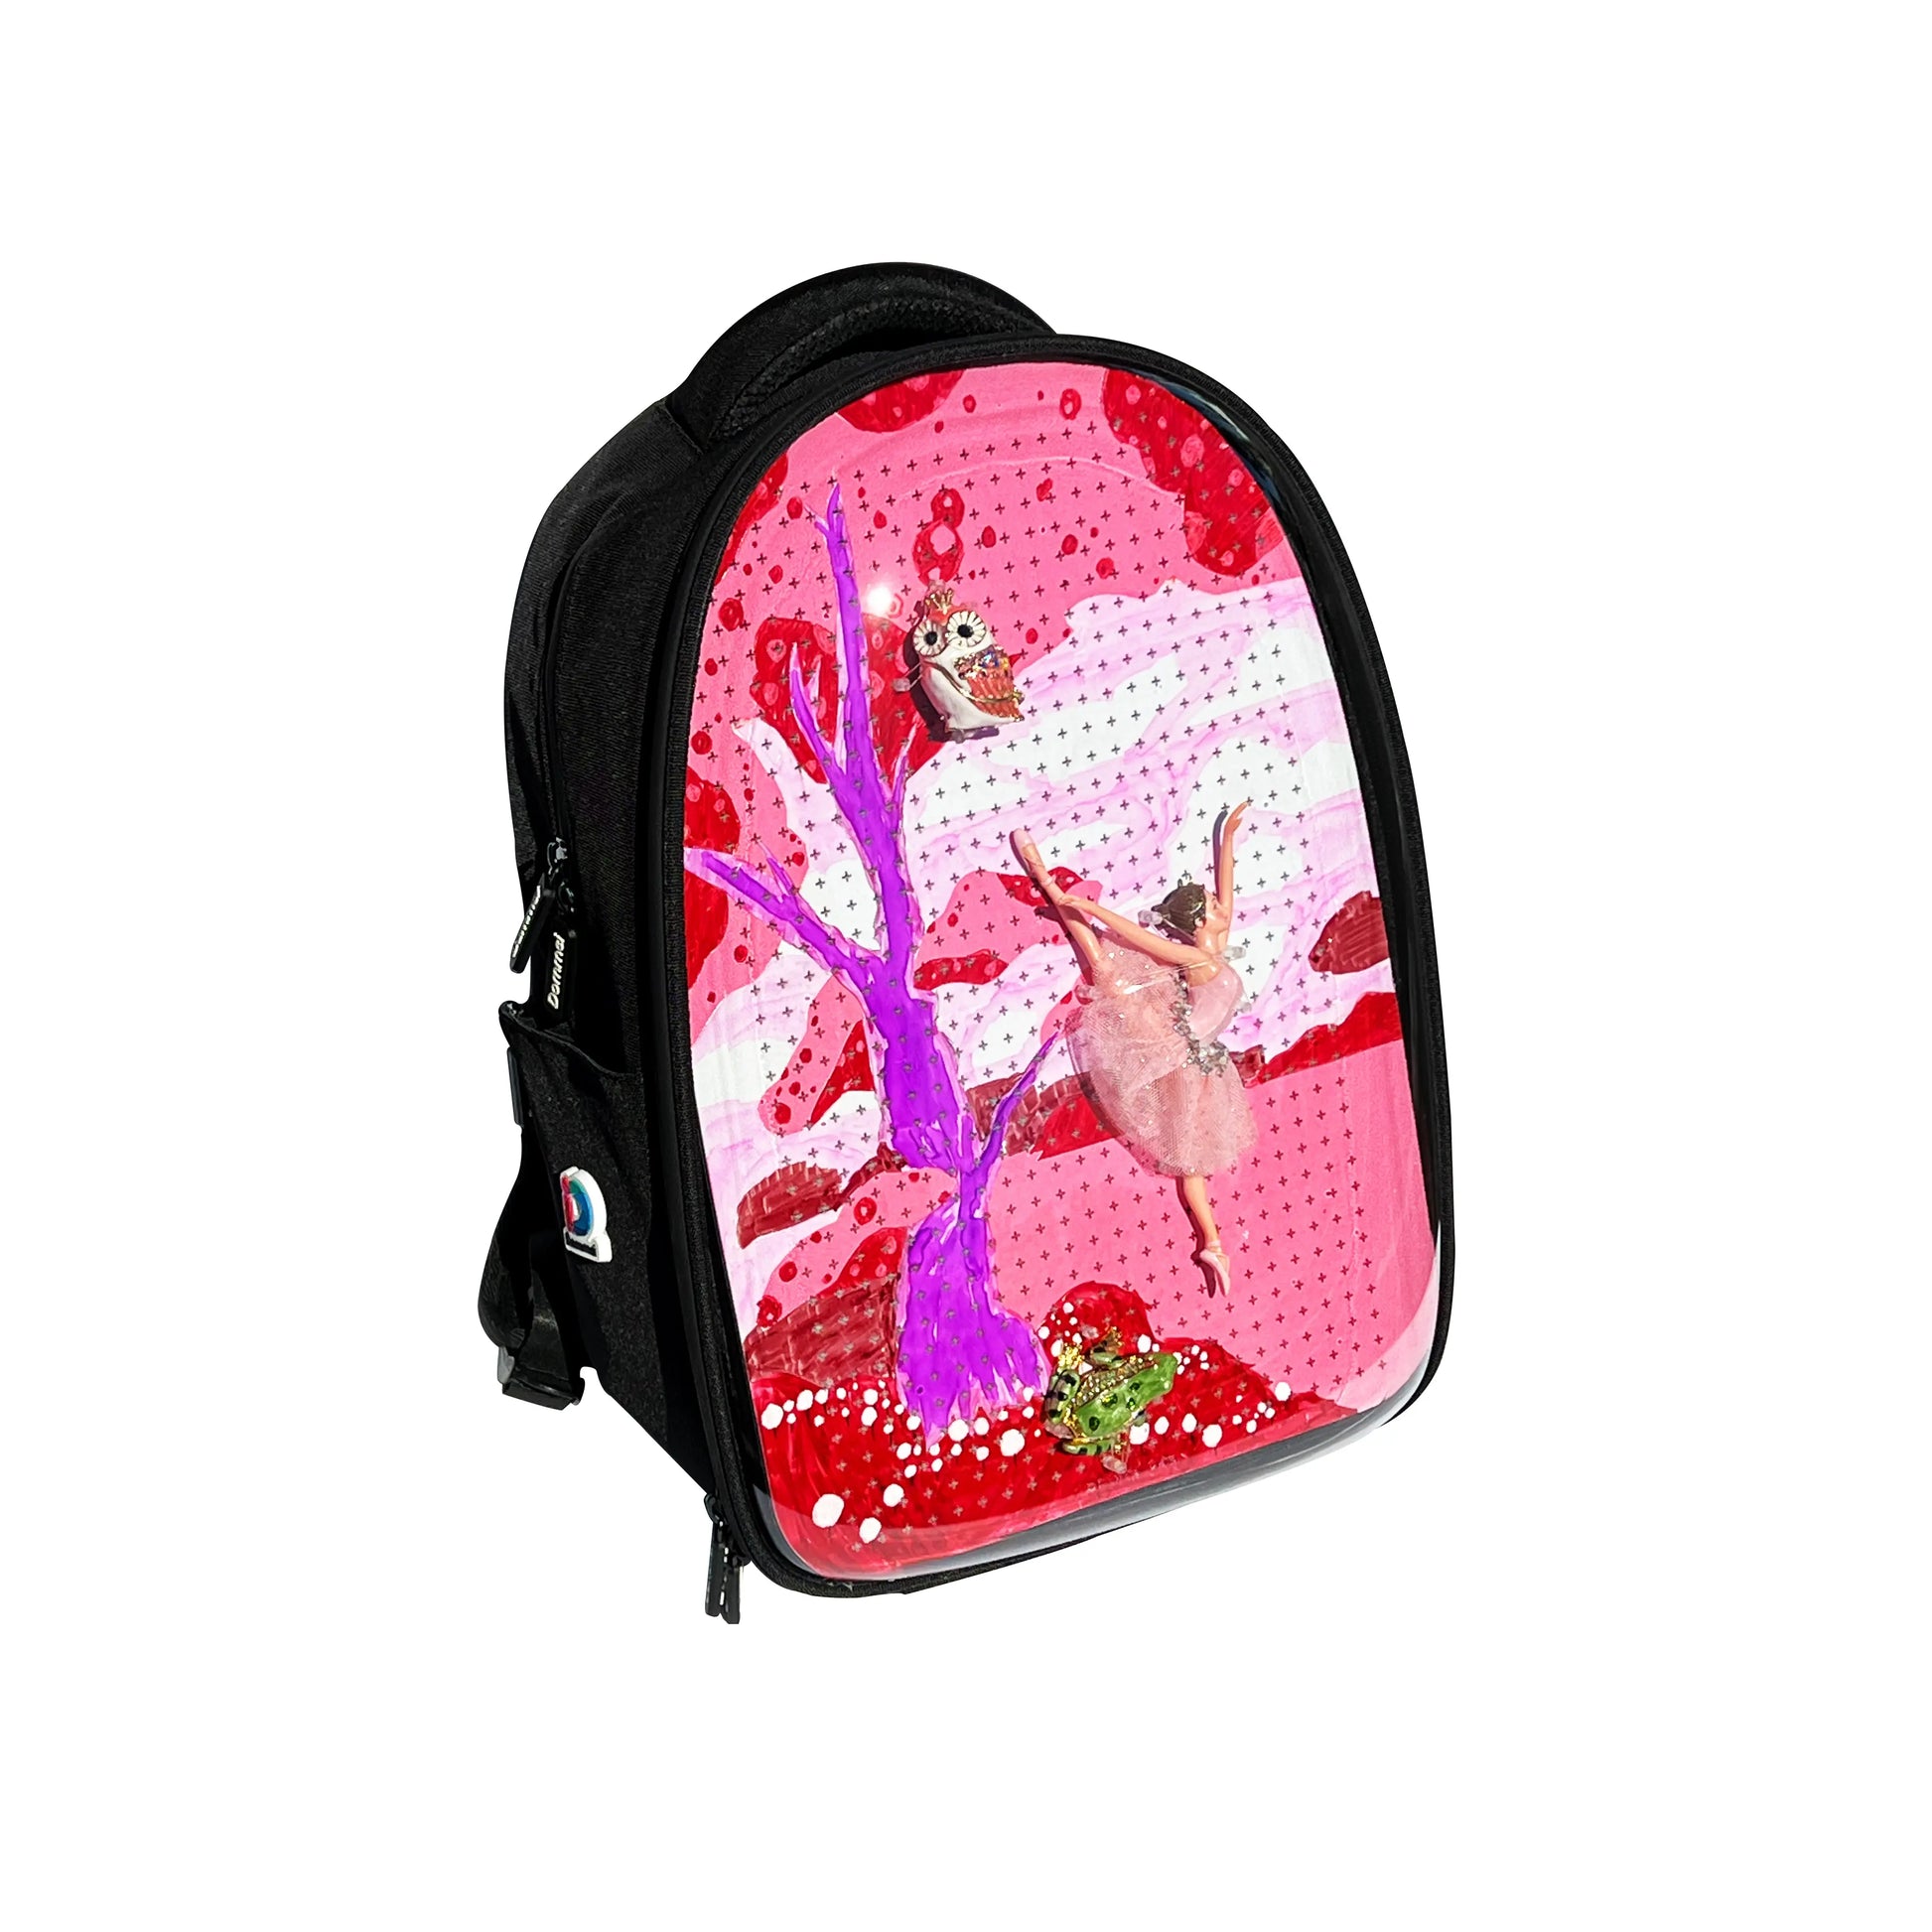 Bimbi Dreams Backpack + Camb. 474 Dots 904 04 Unisex Bags 